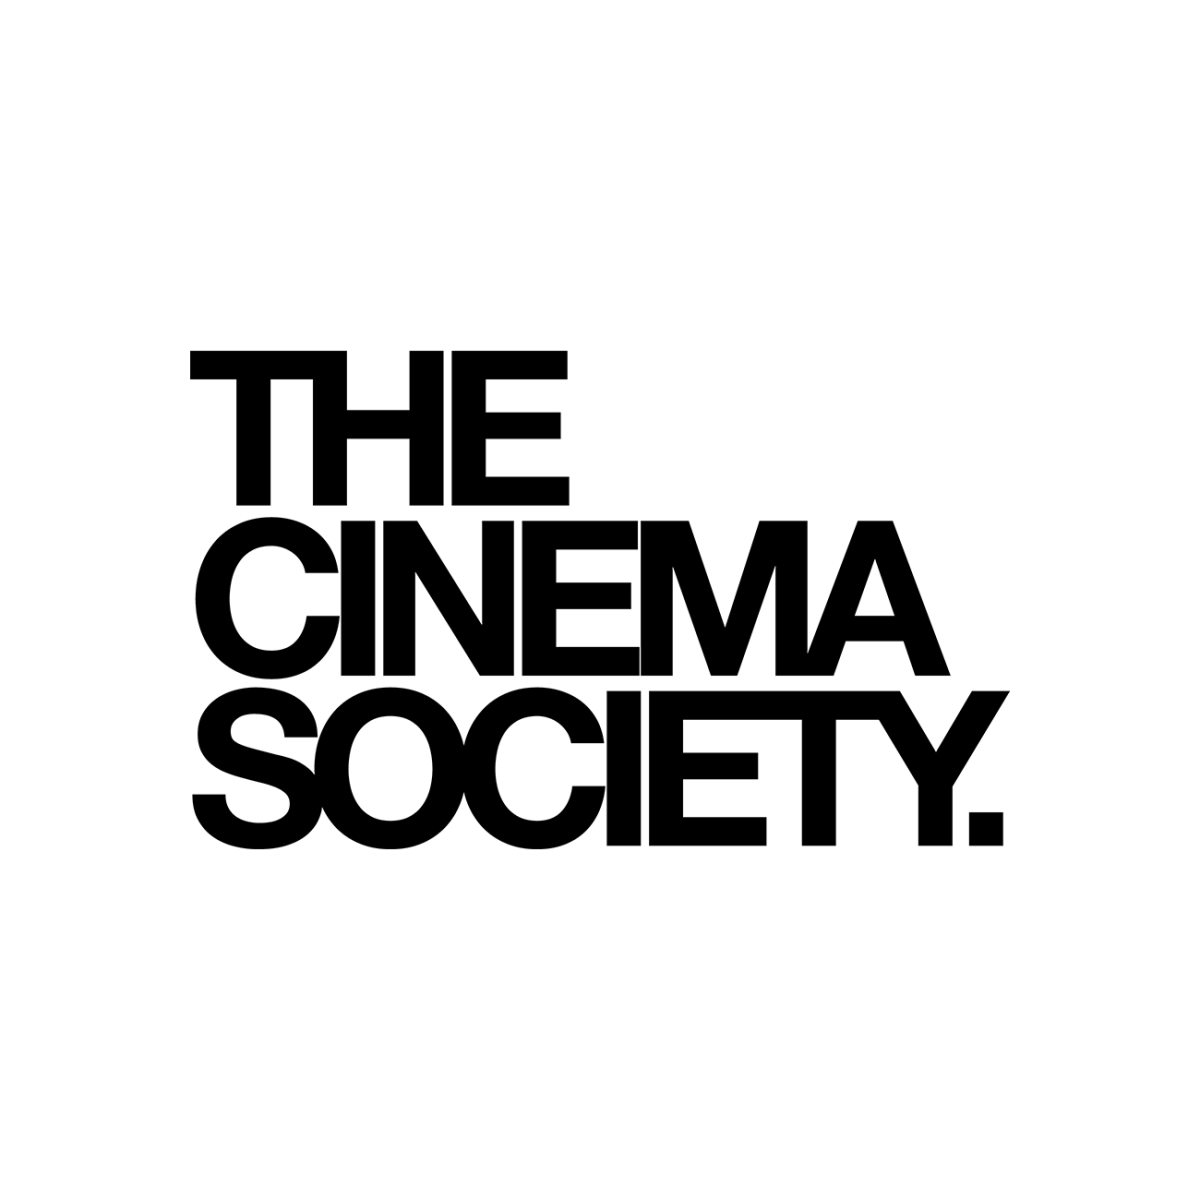 The Cinema Society logo